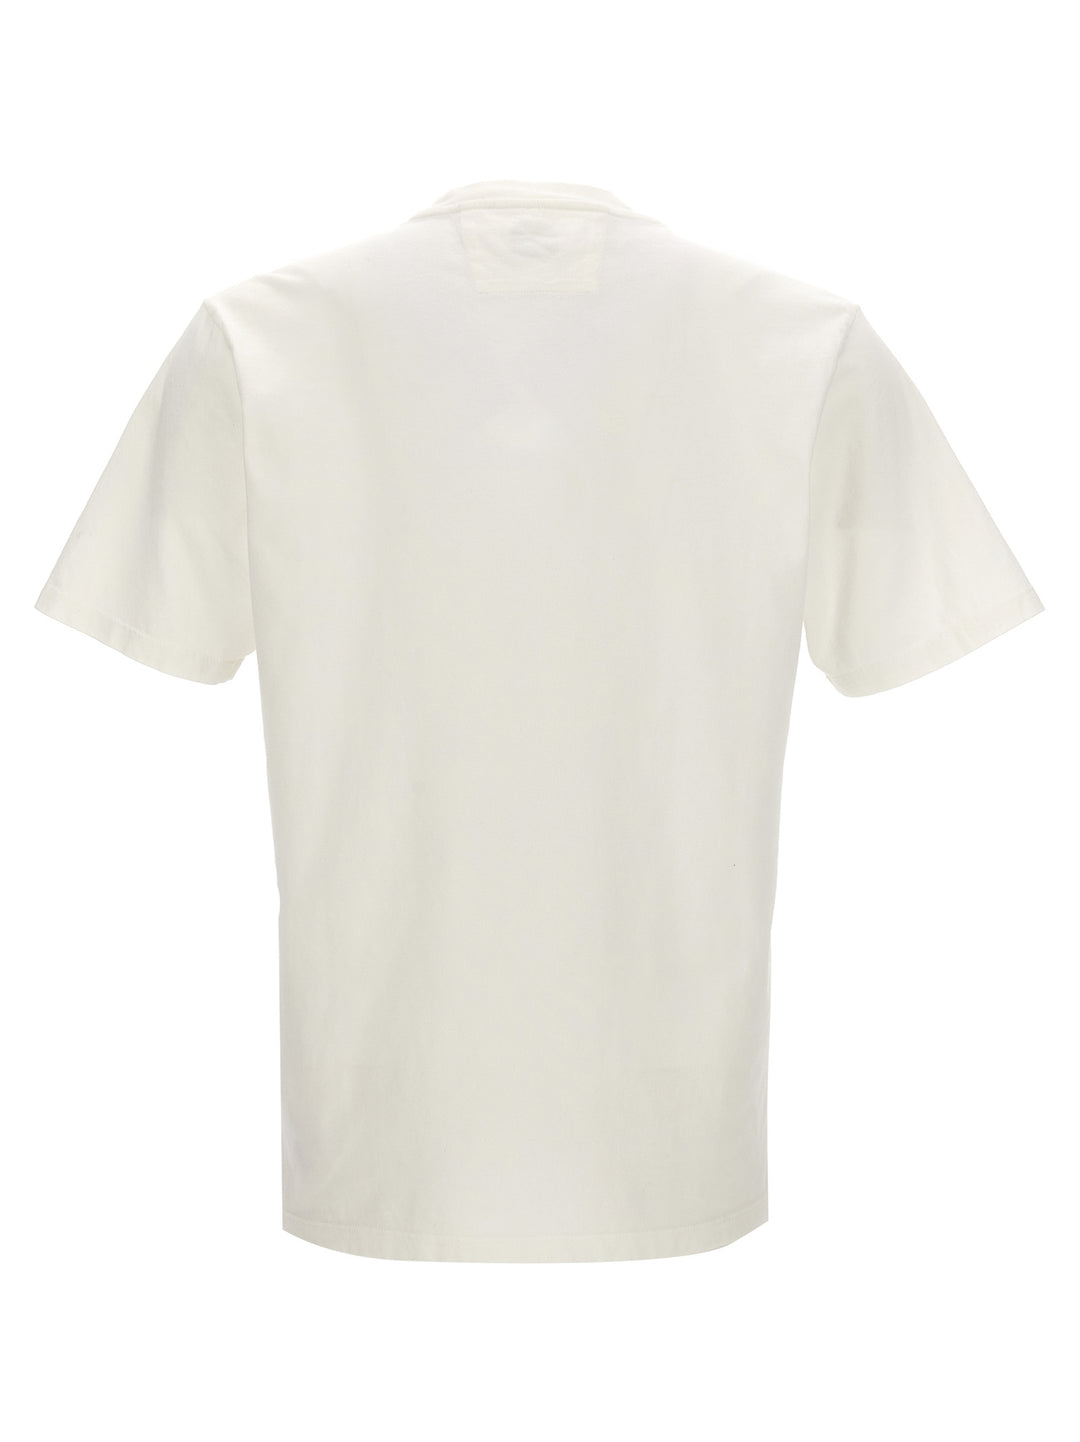 Facili-Tees T Shirt Bianco